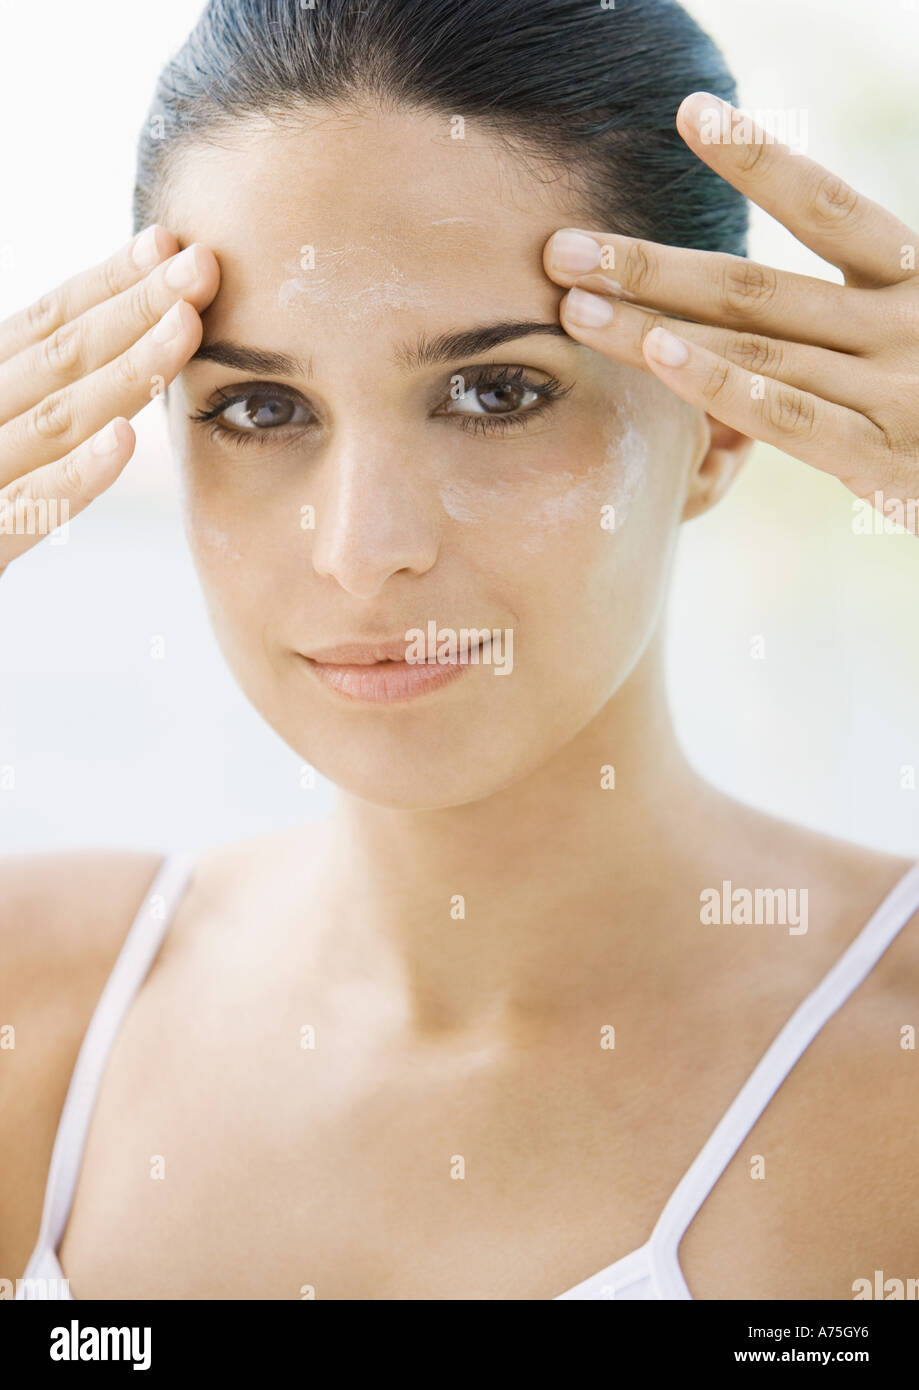 Woman applying moisturizer to face Stock Photo